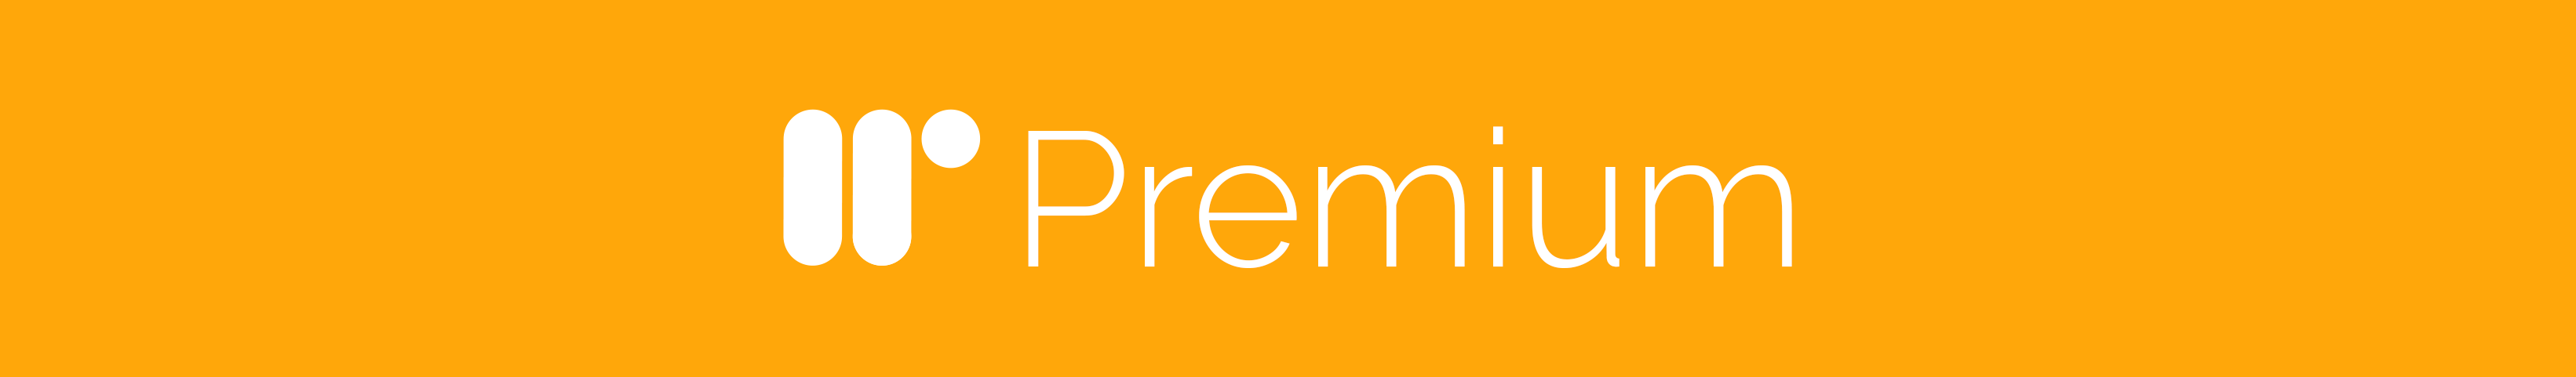 Pindena Premium påmeldingssystem produktbanner